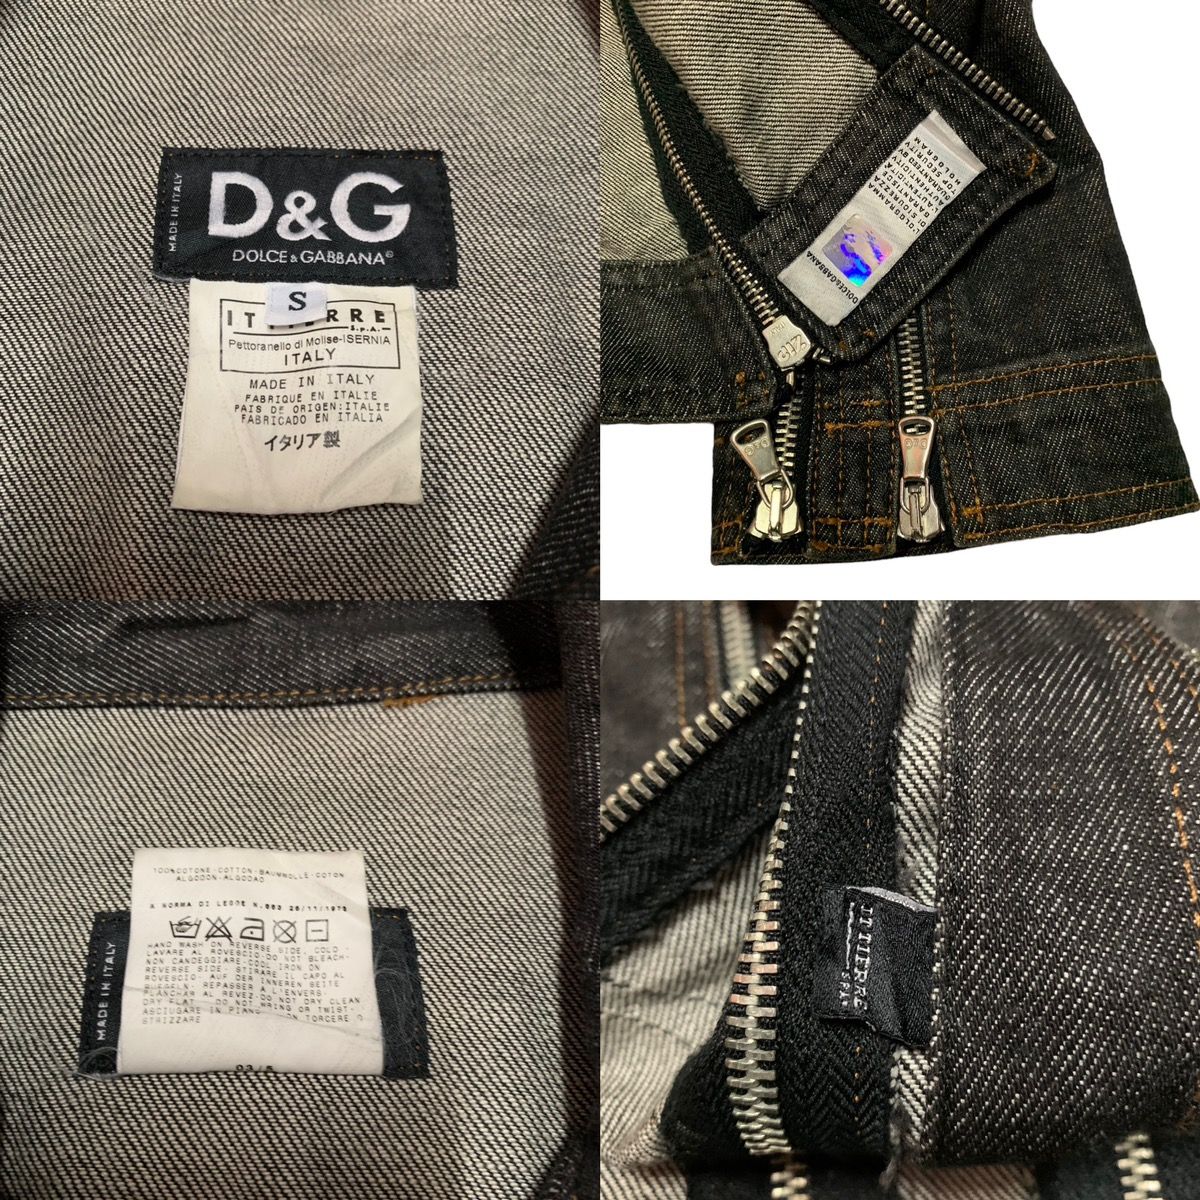 Rare D&G Dolce Gabbana Zipper 2004 Shredder Denim Jacket - 16